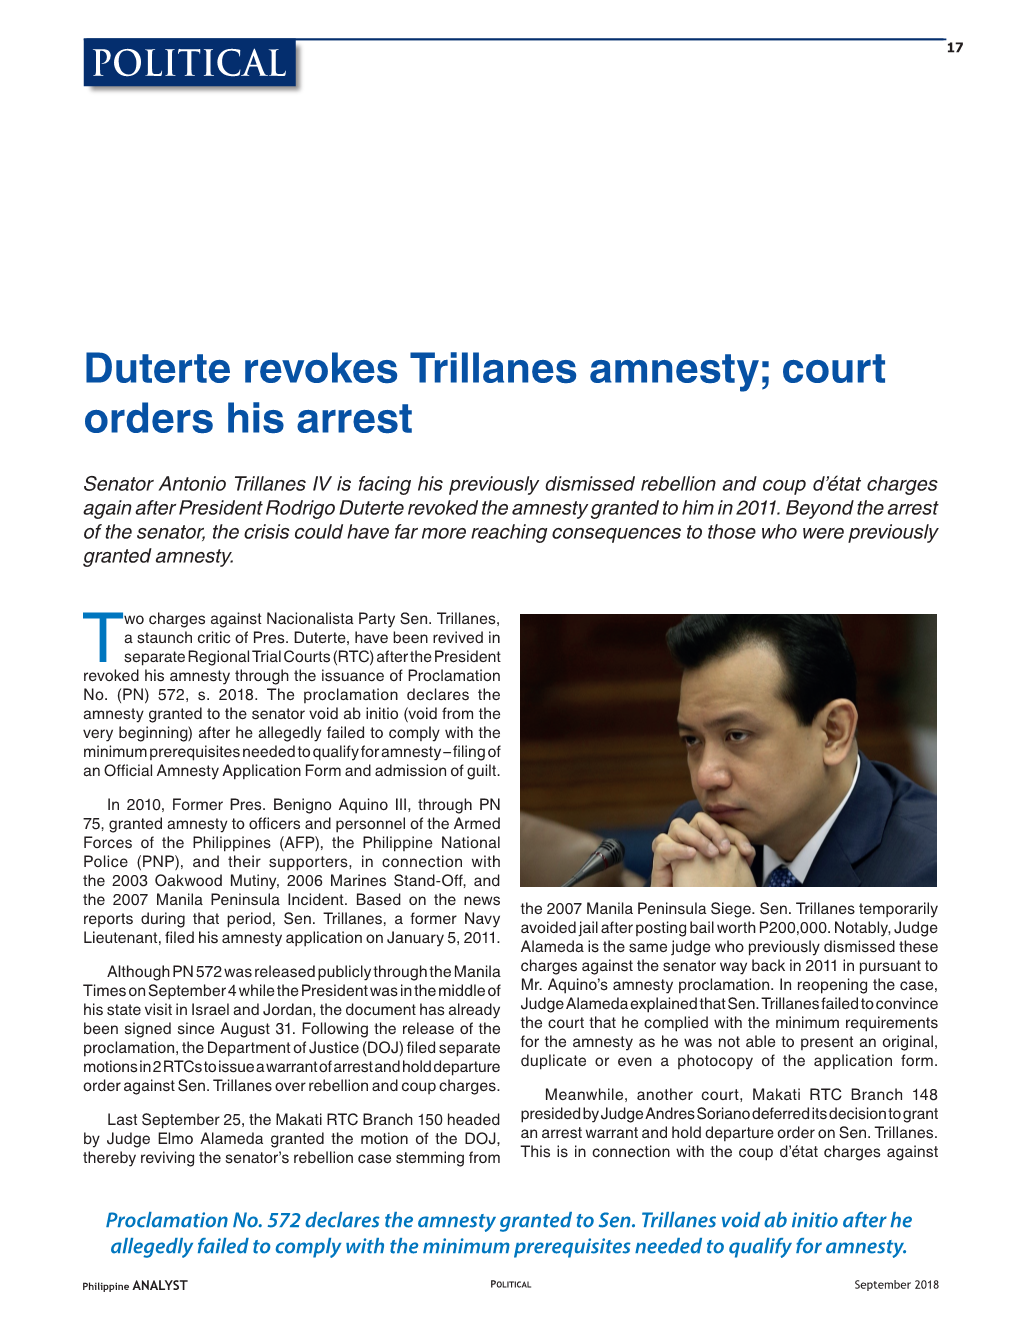 Duterte Revokes Trillanes Amnesty; Court Orders His Arrest